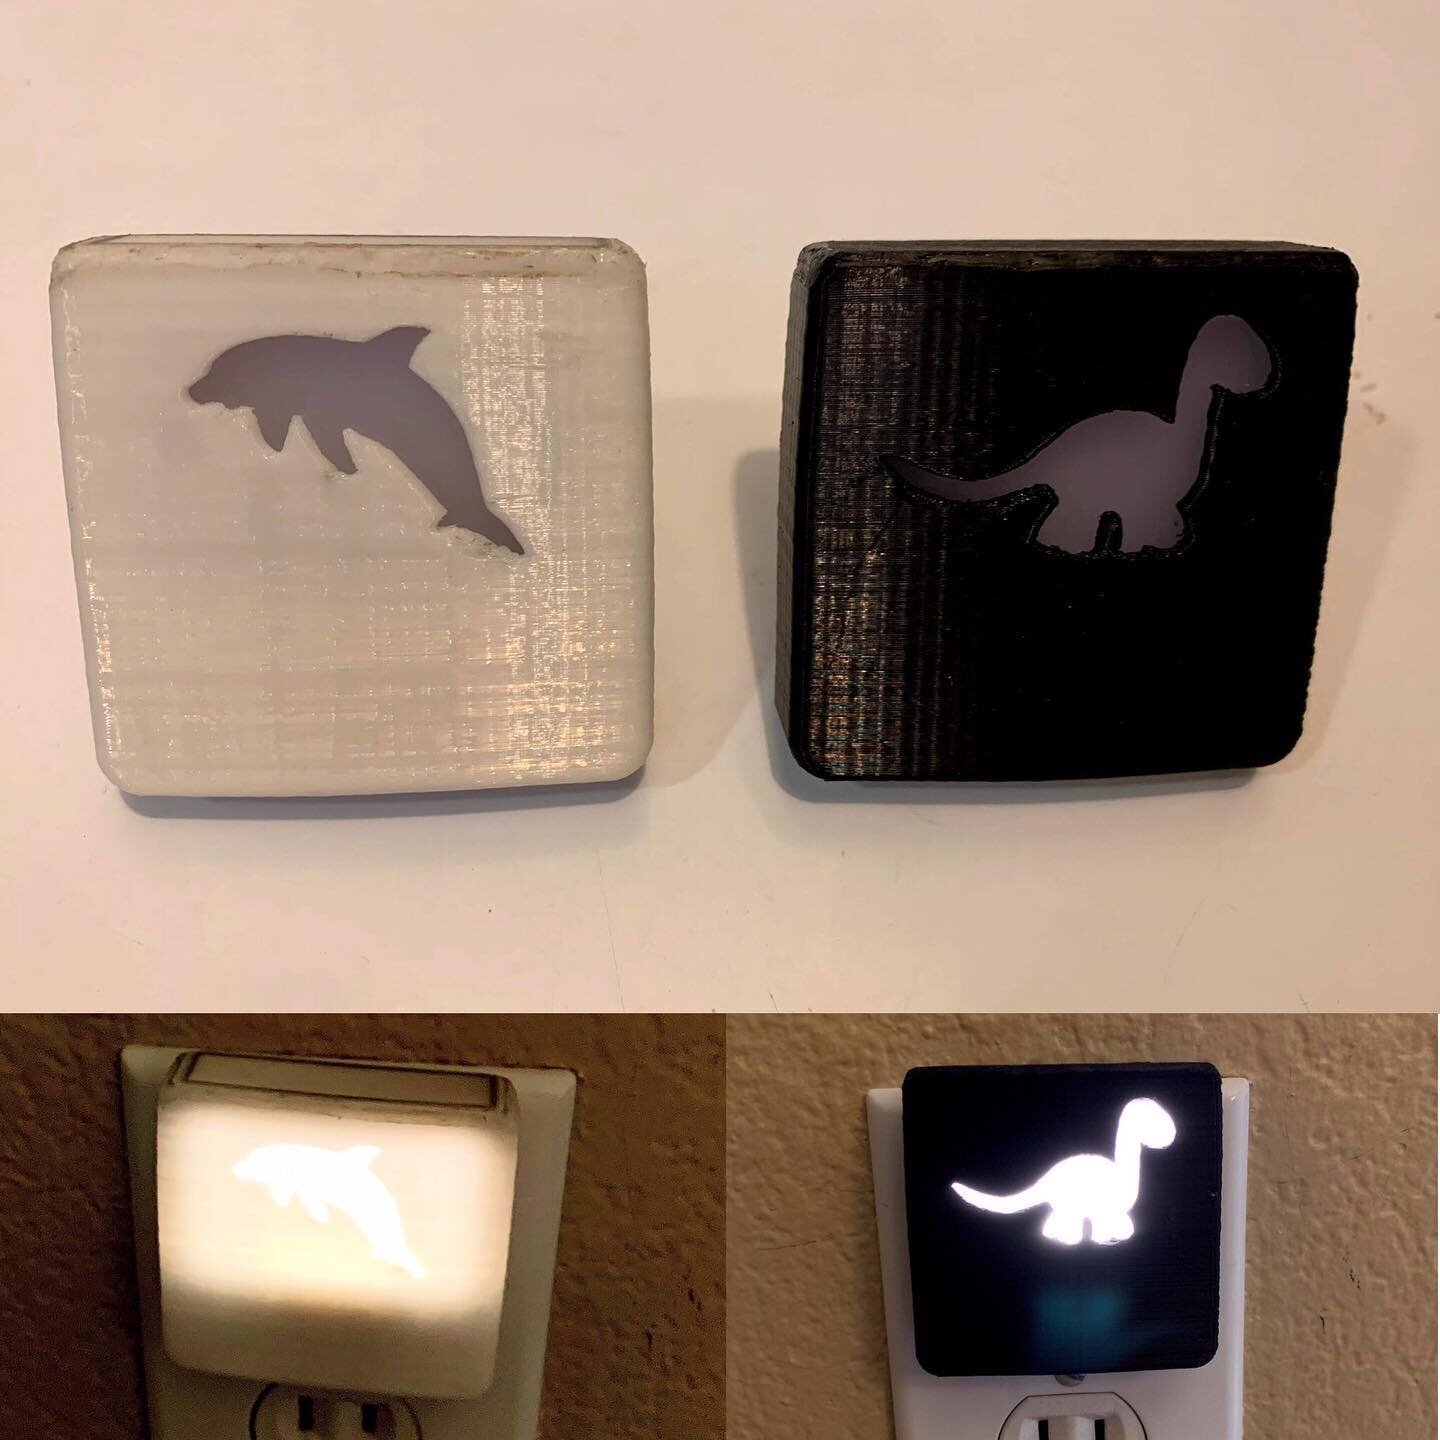 Night light covers #3dprinting #solidworks #industrialdesign #nightlights #productdesign #designforkids #generalelectric #dinosaur #dolphins #blackandwhite #3dmodeling #aneta2plus